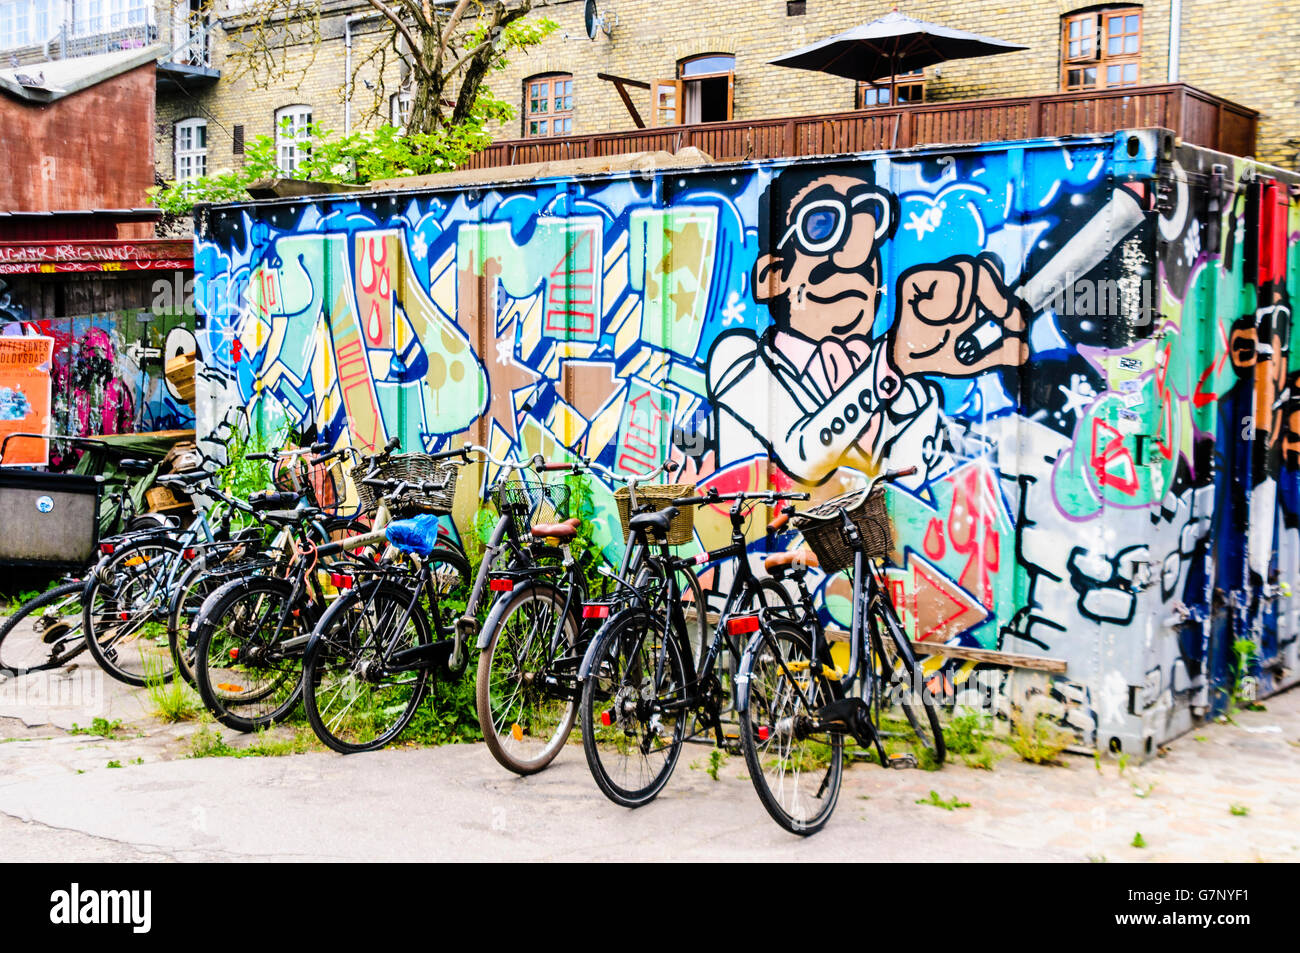 Bicycle park in Freetown Christiania, Copenhagen Stock Photo